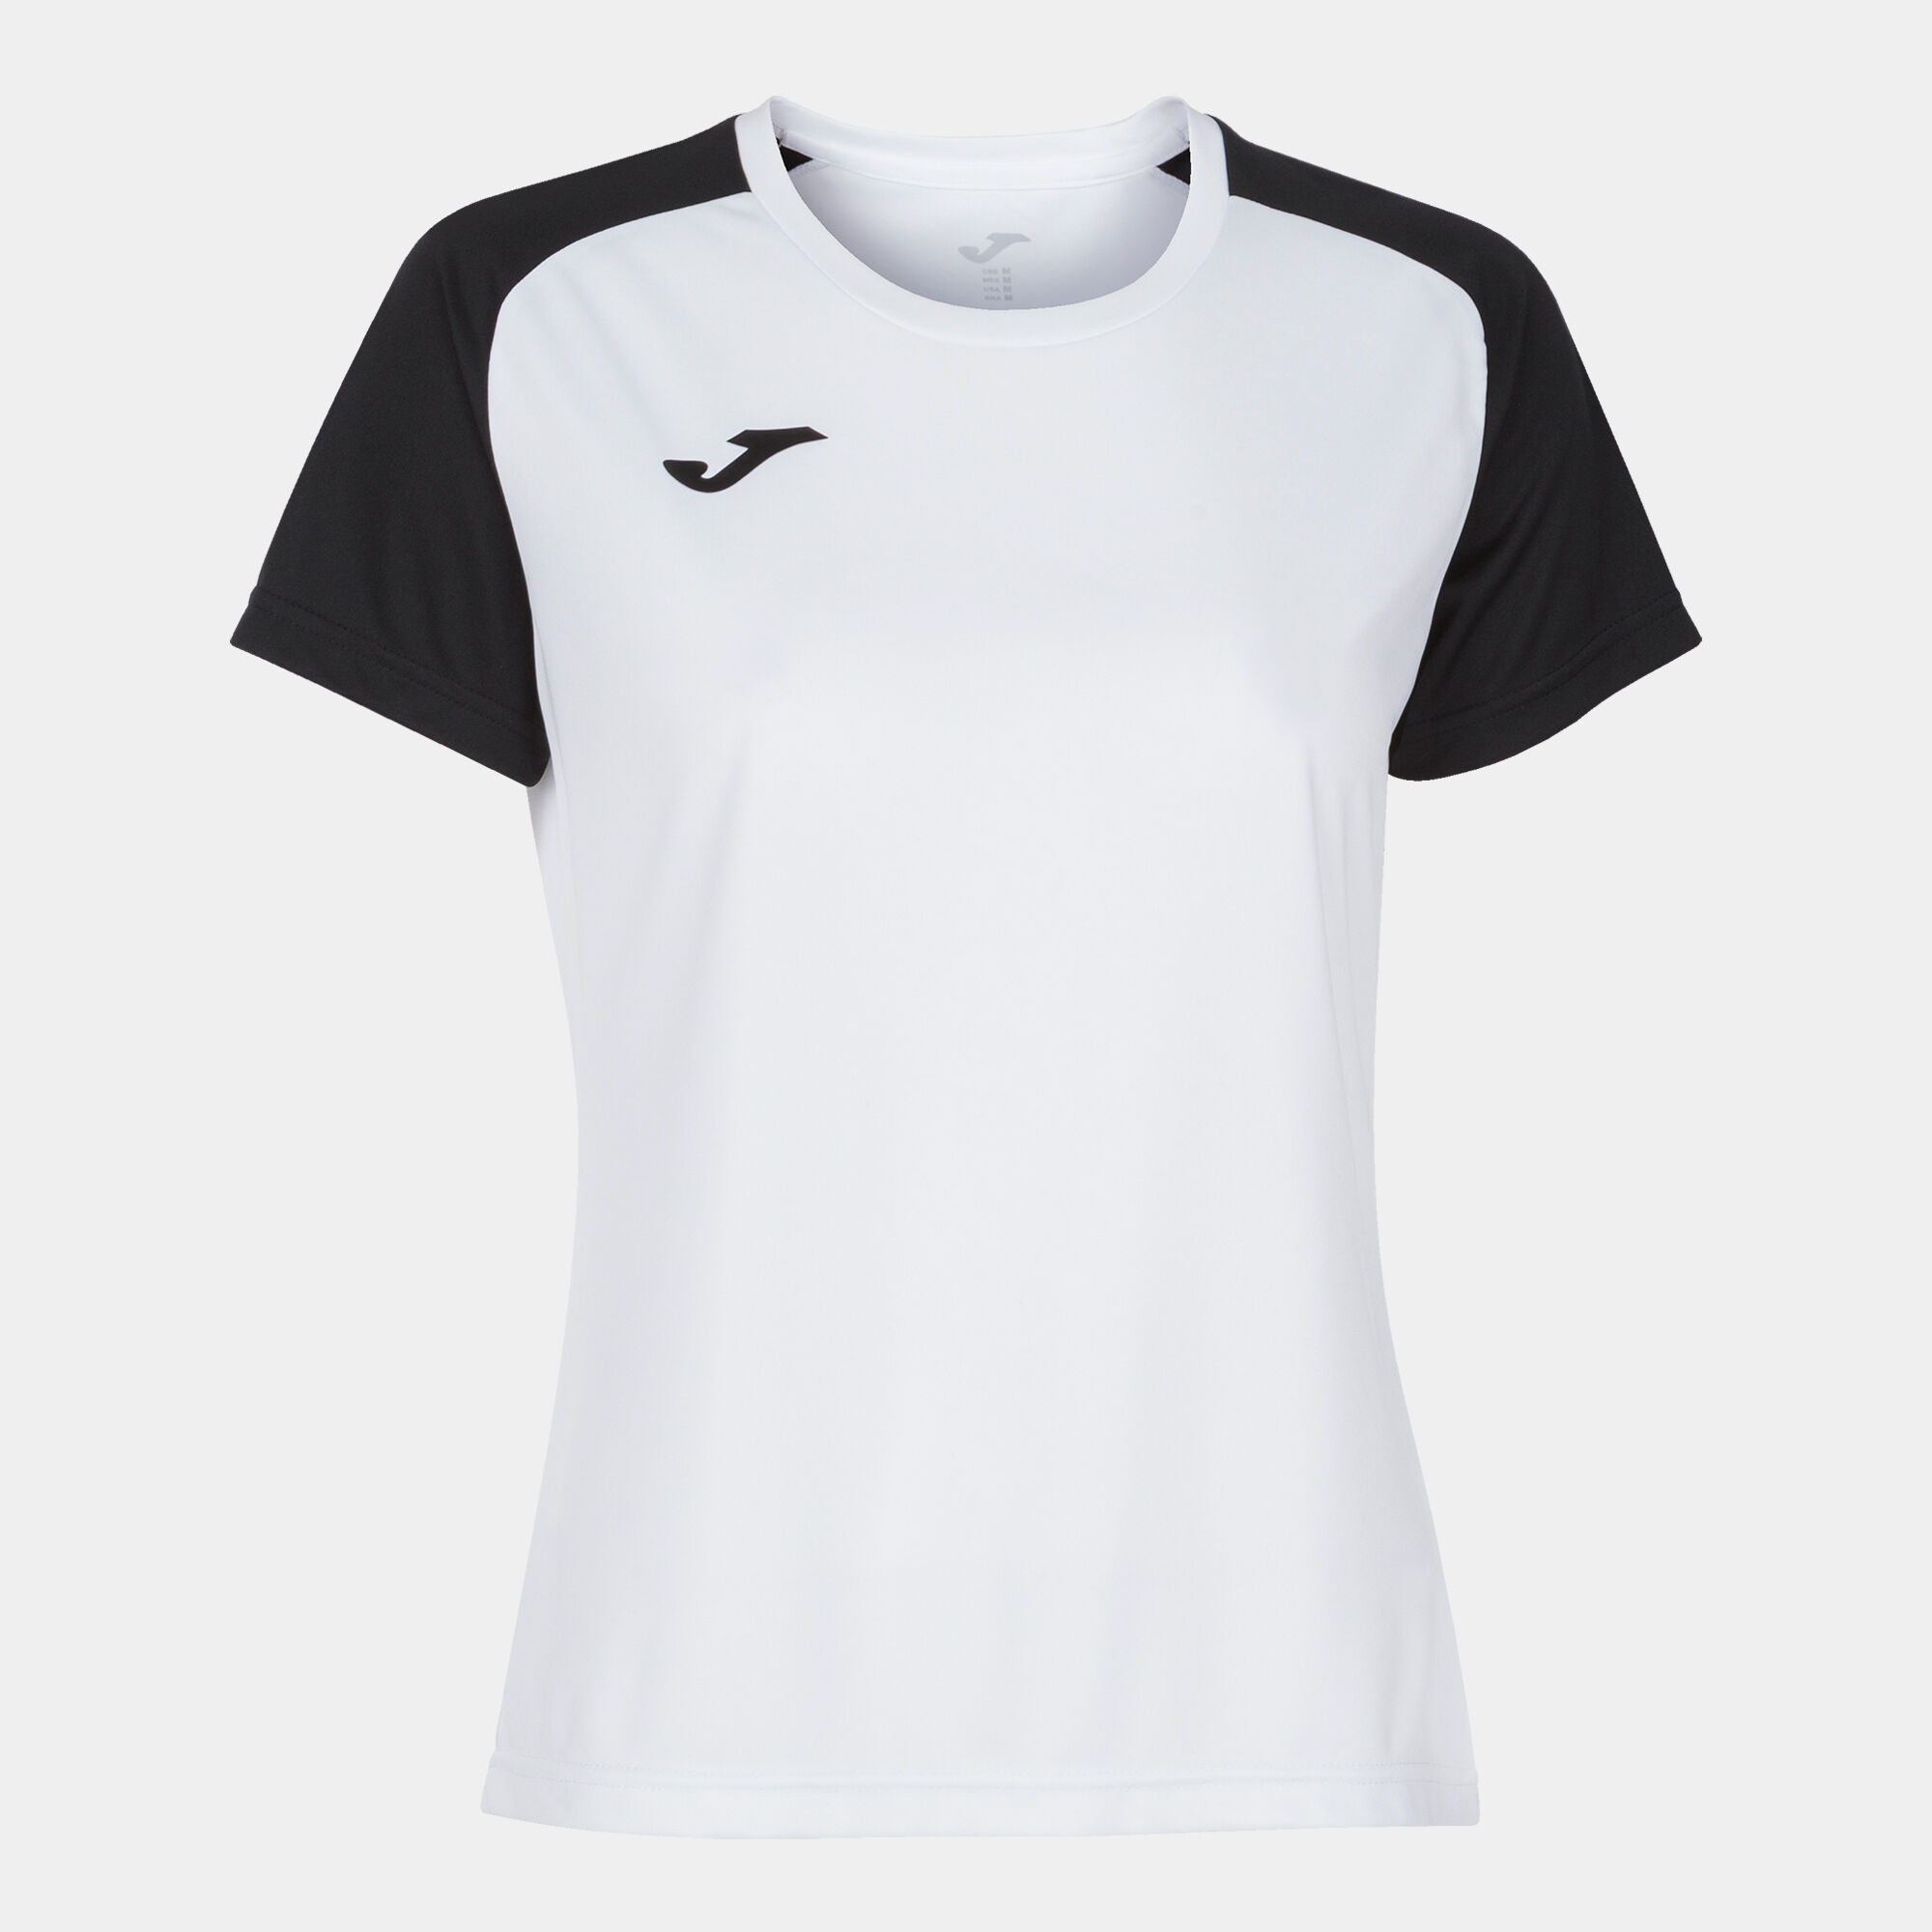 Camiseta manga corta mujer Academy IV blanco negro